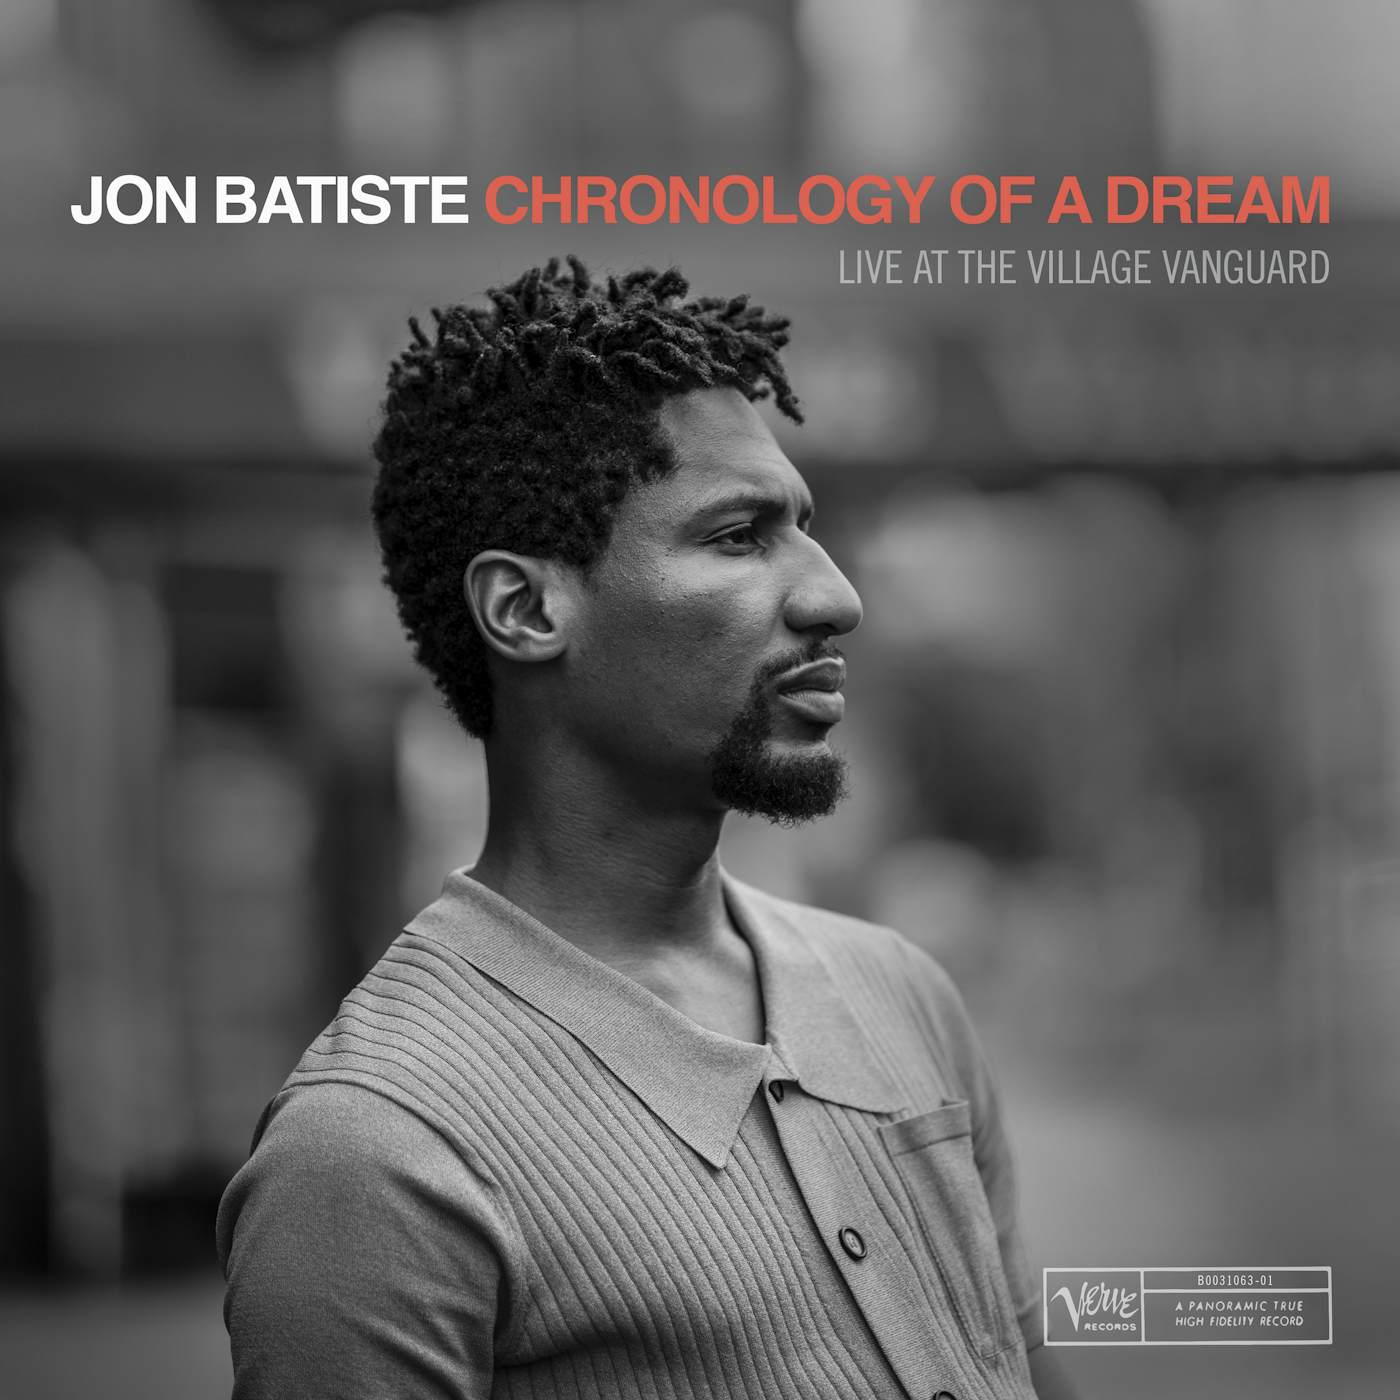 Jon Batiste CHRONOLOGY OF A DREAM: LIVE AT THE VILLAGE VANGUAR Vinyl Record